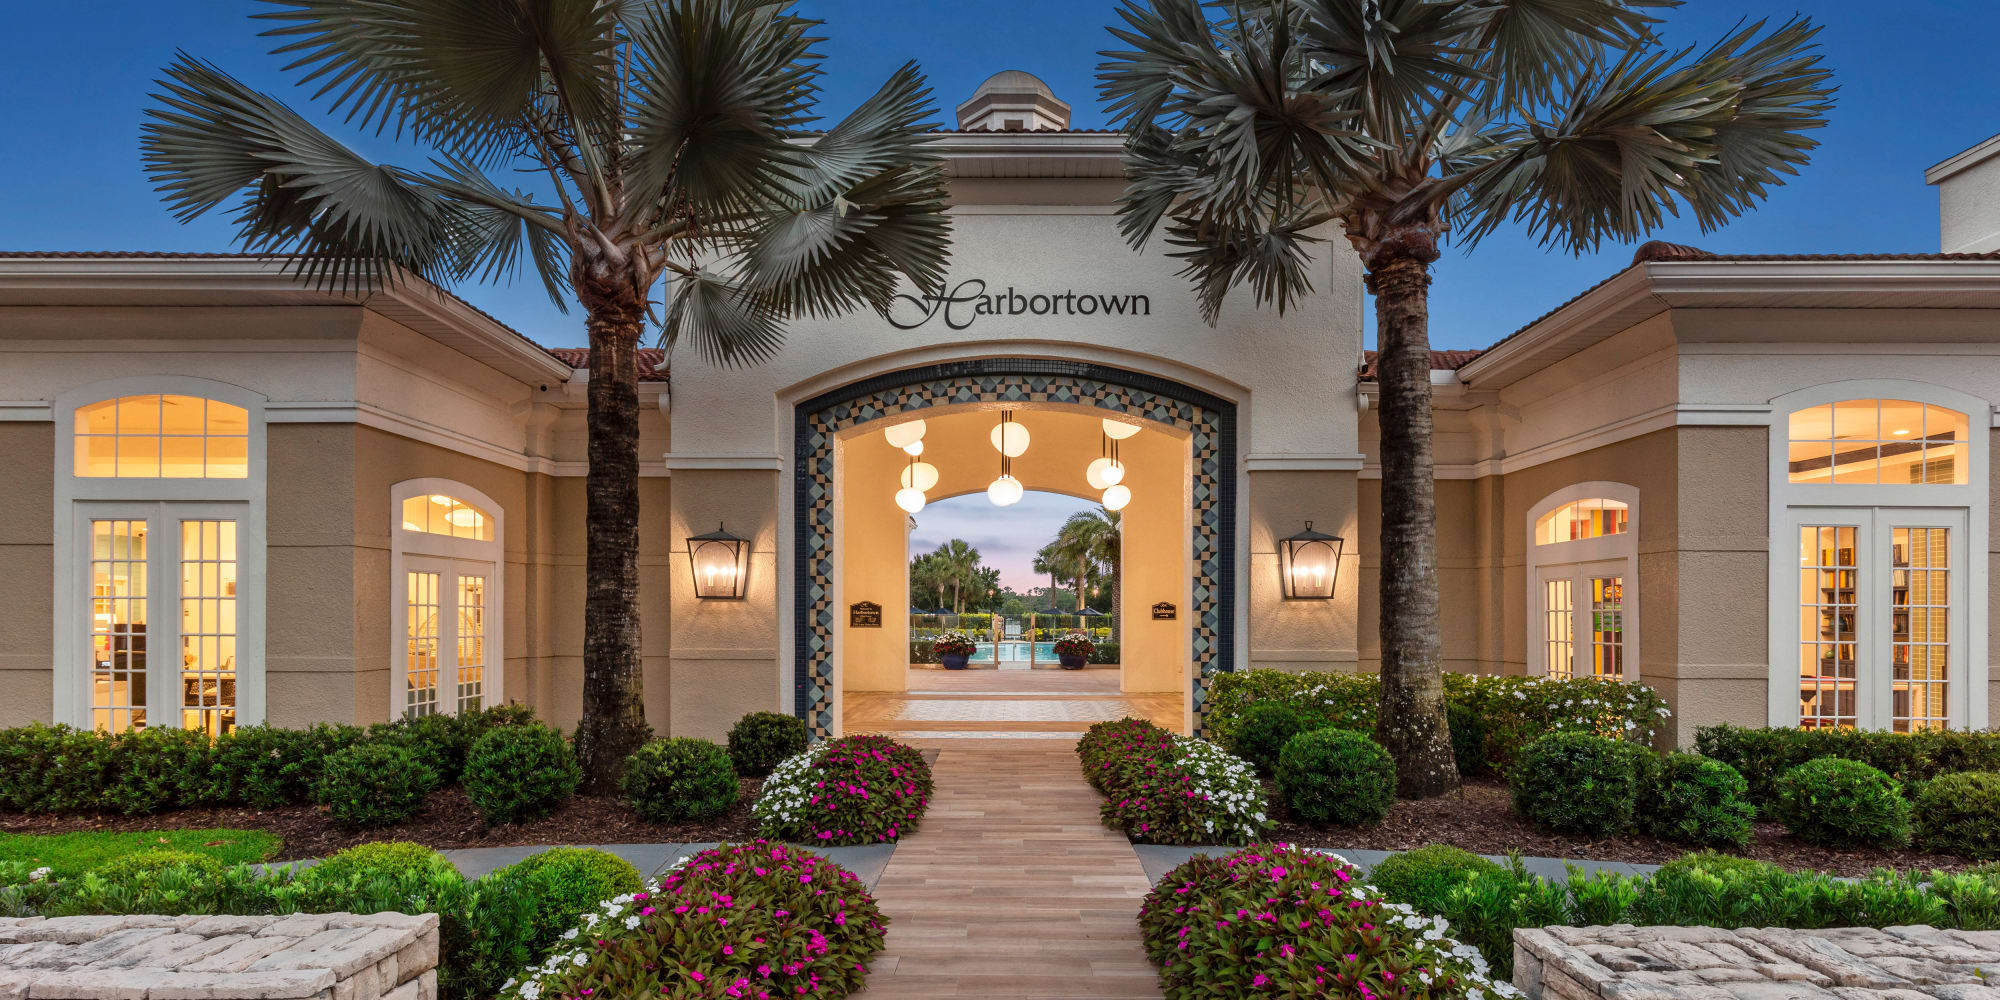 Entrance to Harbortown Apartments in Orlando, Florida